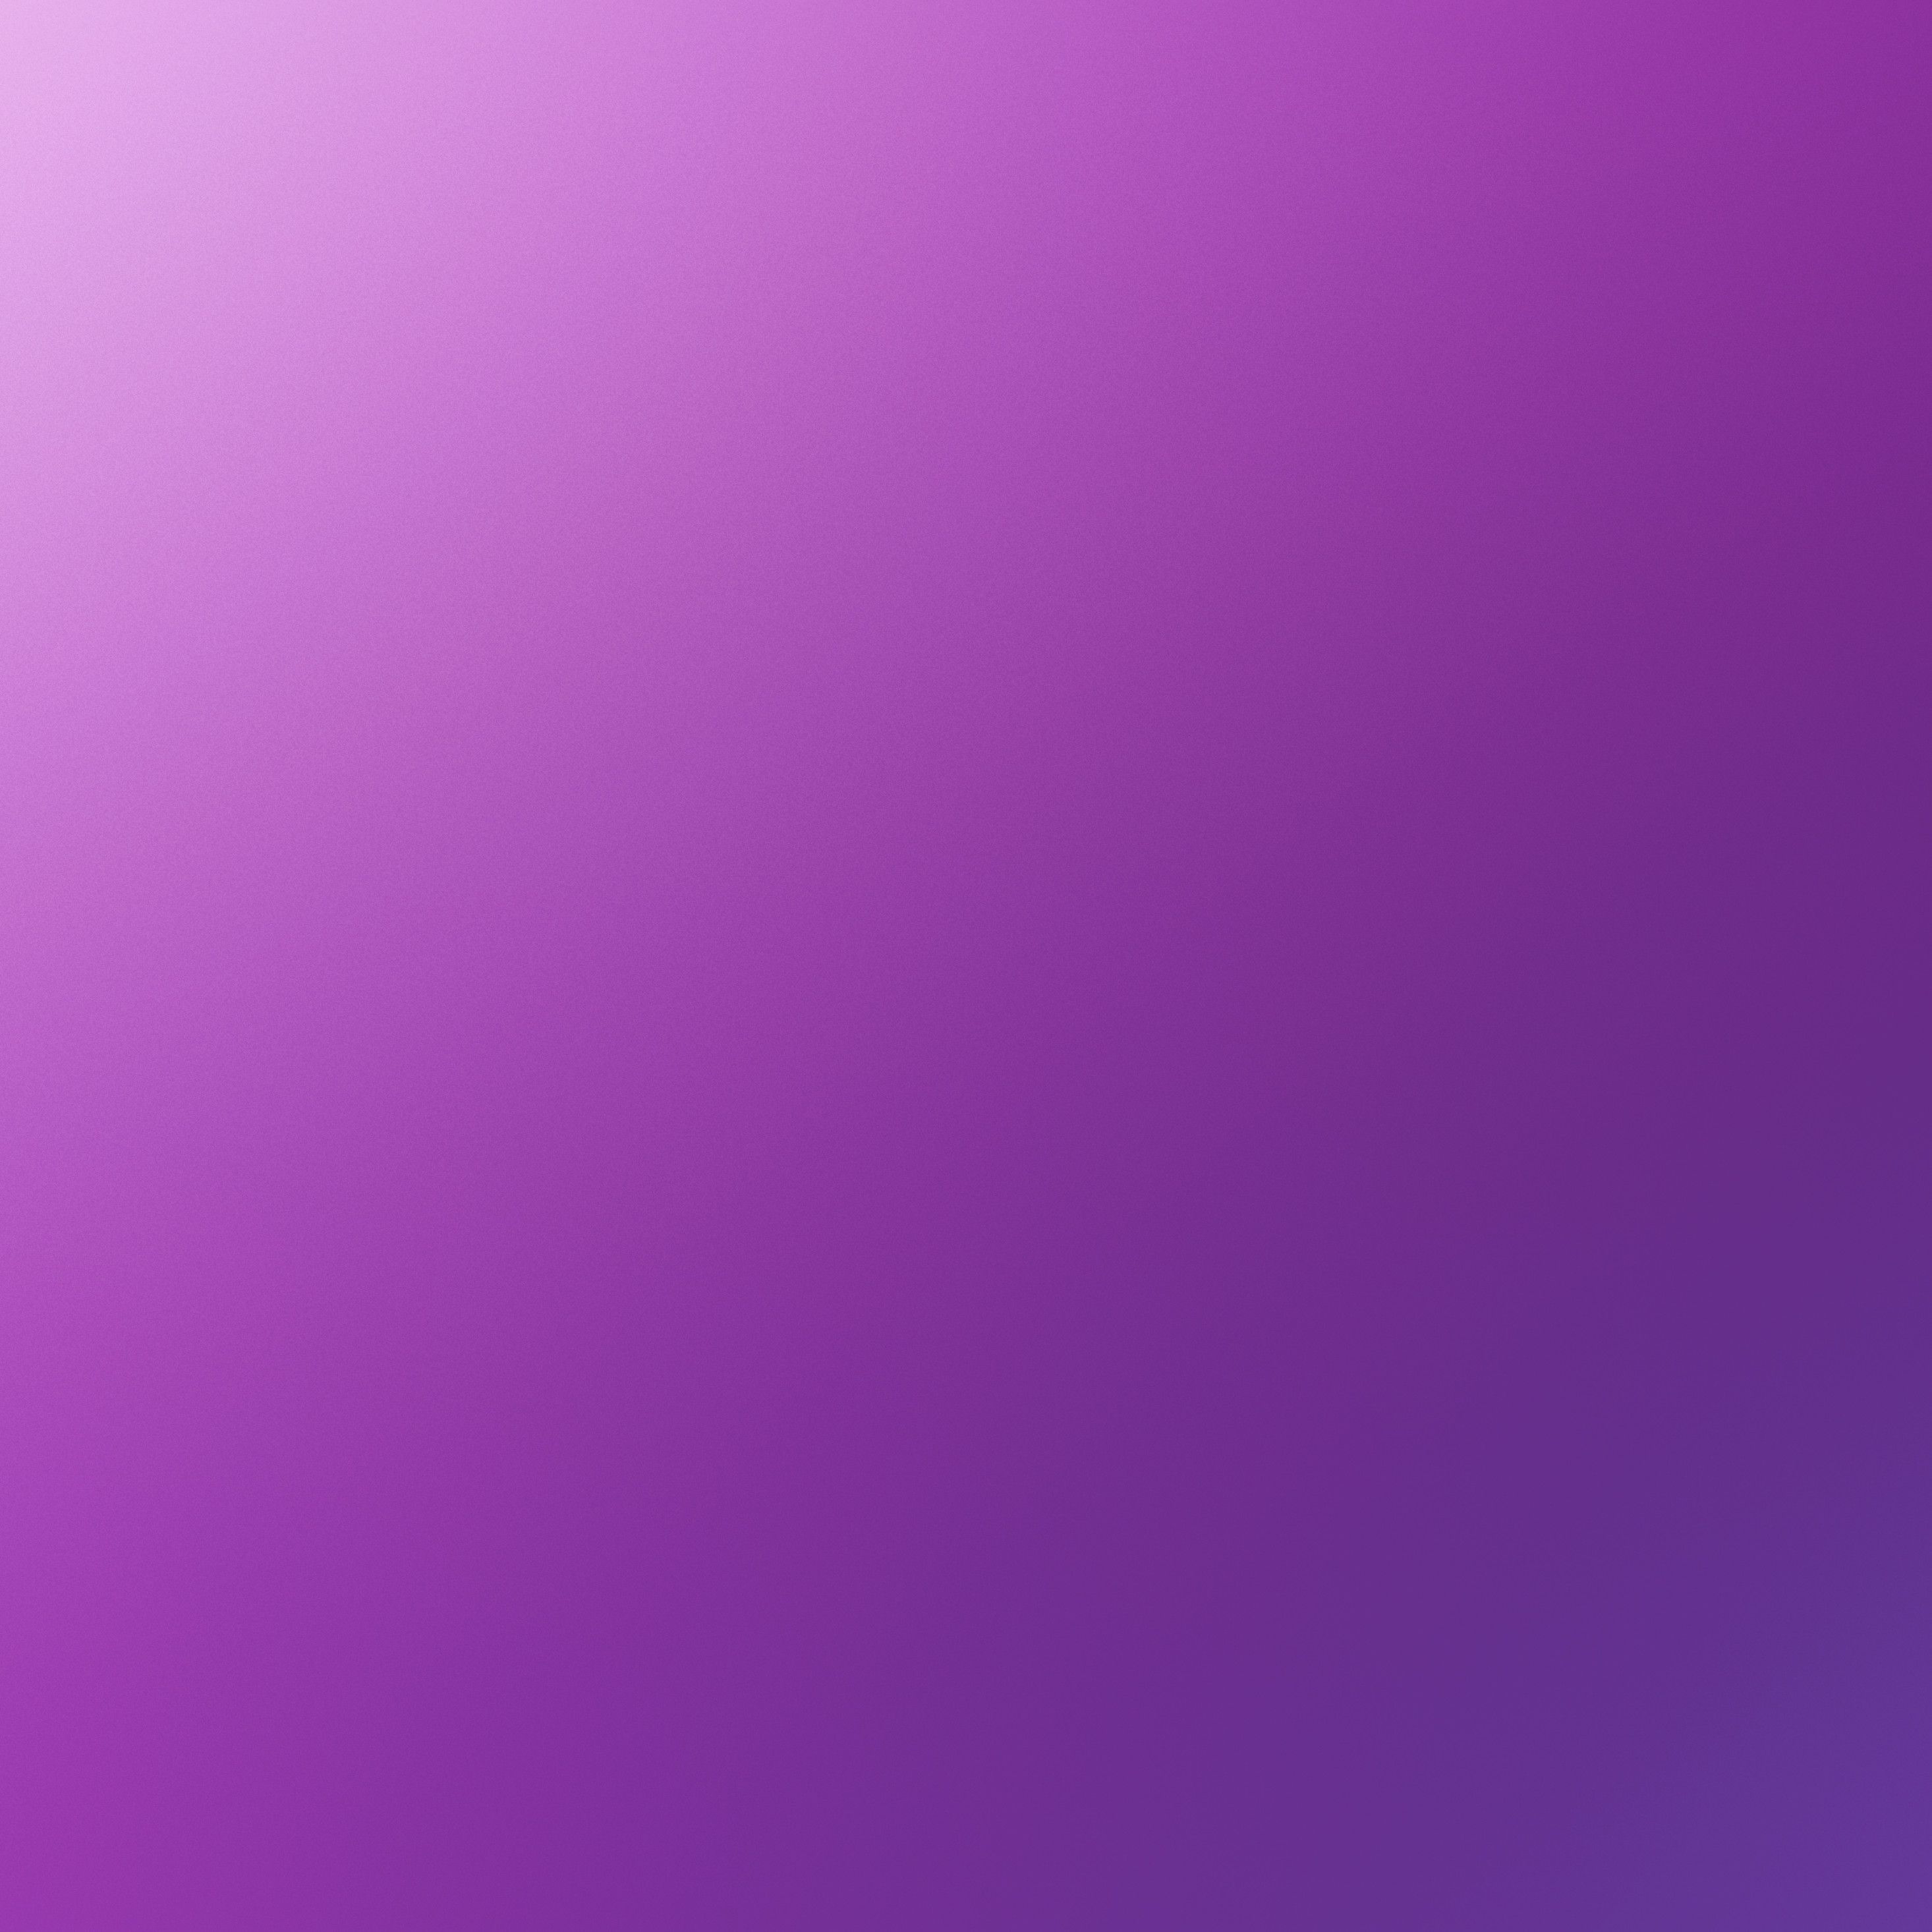 Light Purple iPad Wallpapers - 4k, HD Light Purple iPad Backgrounds on ...